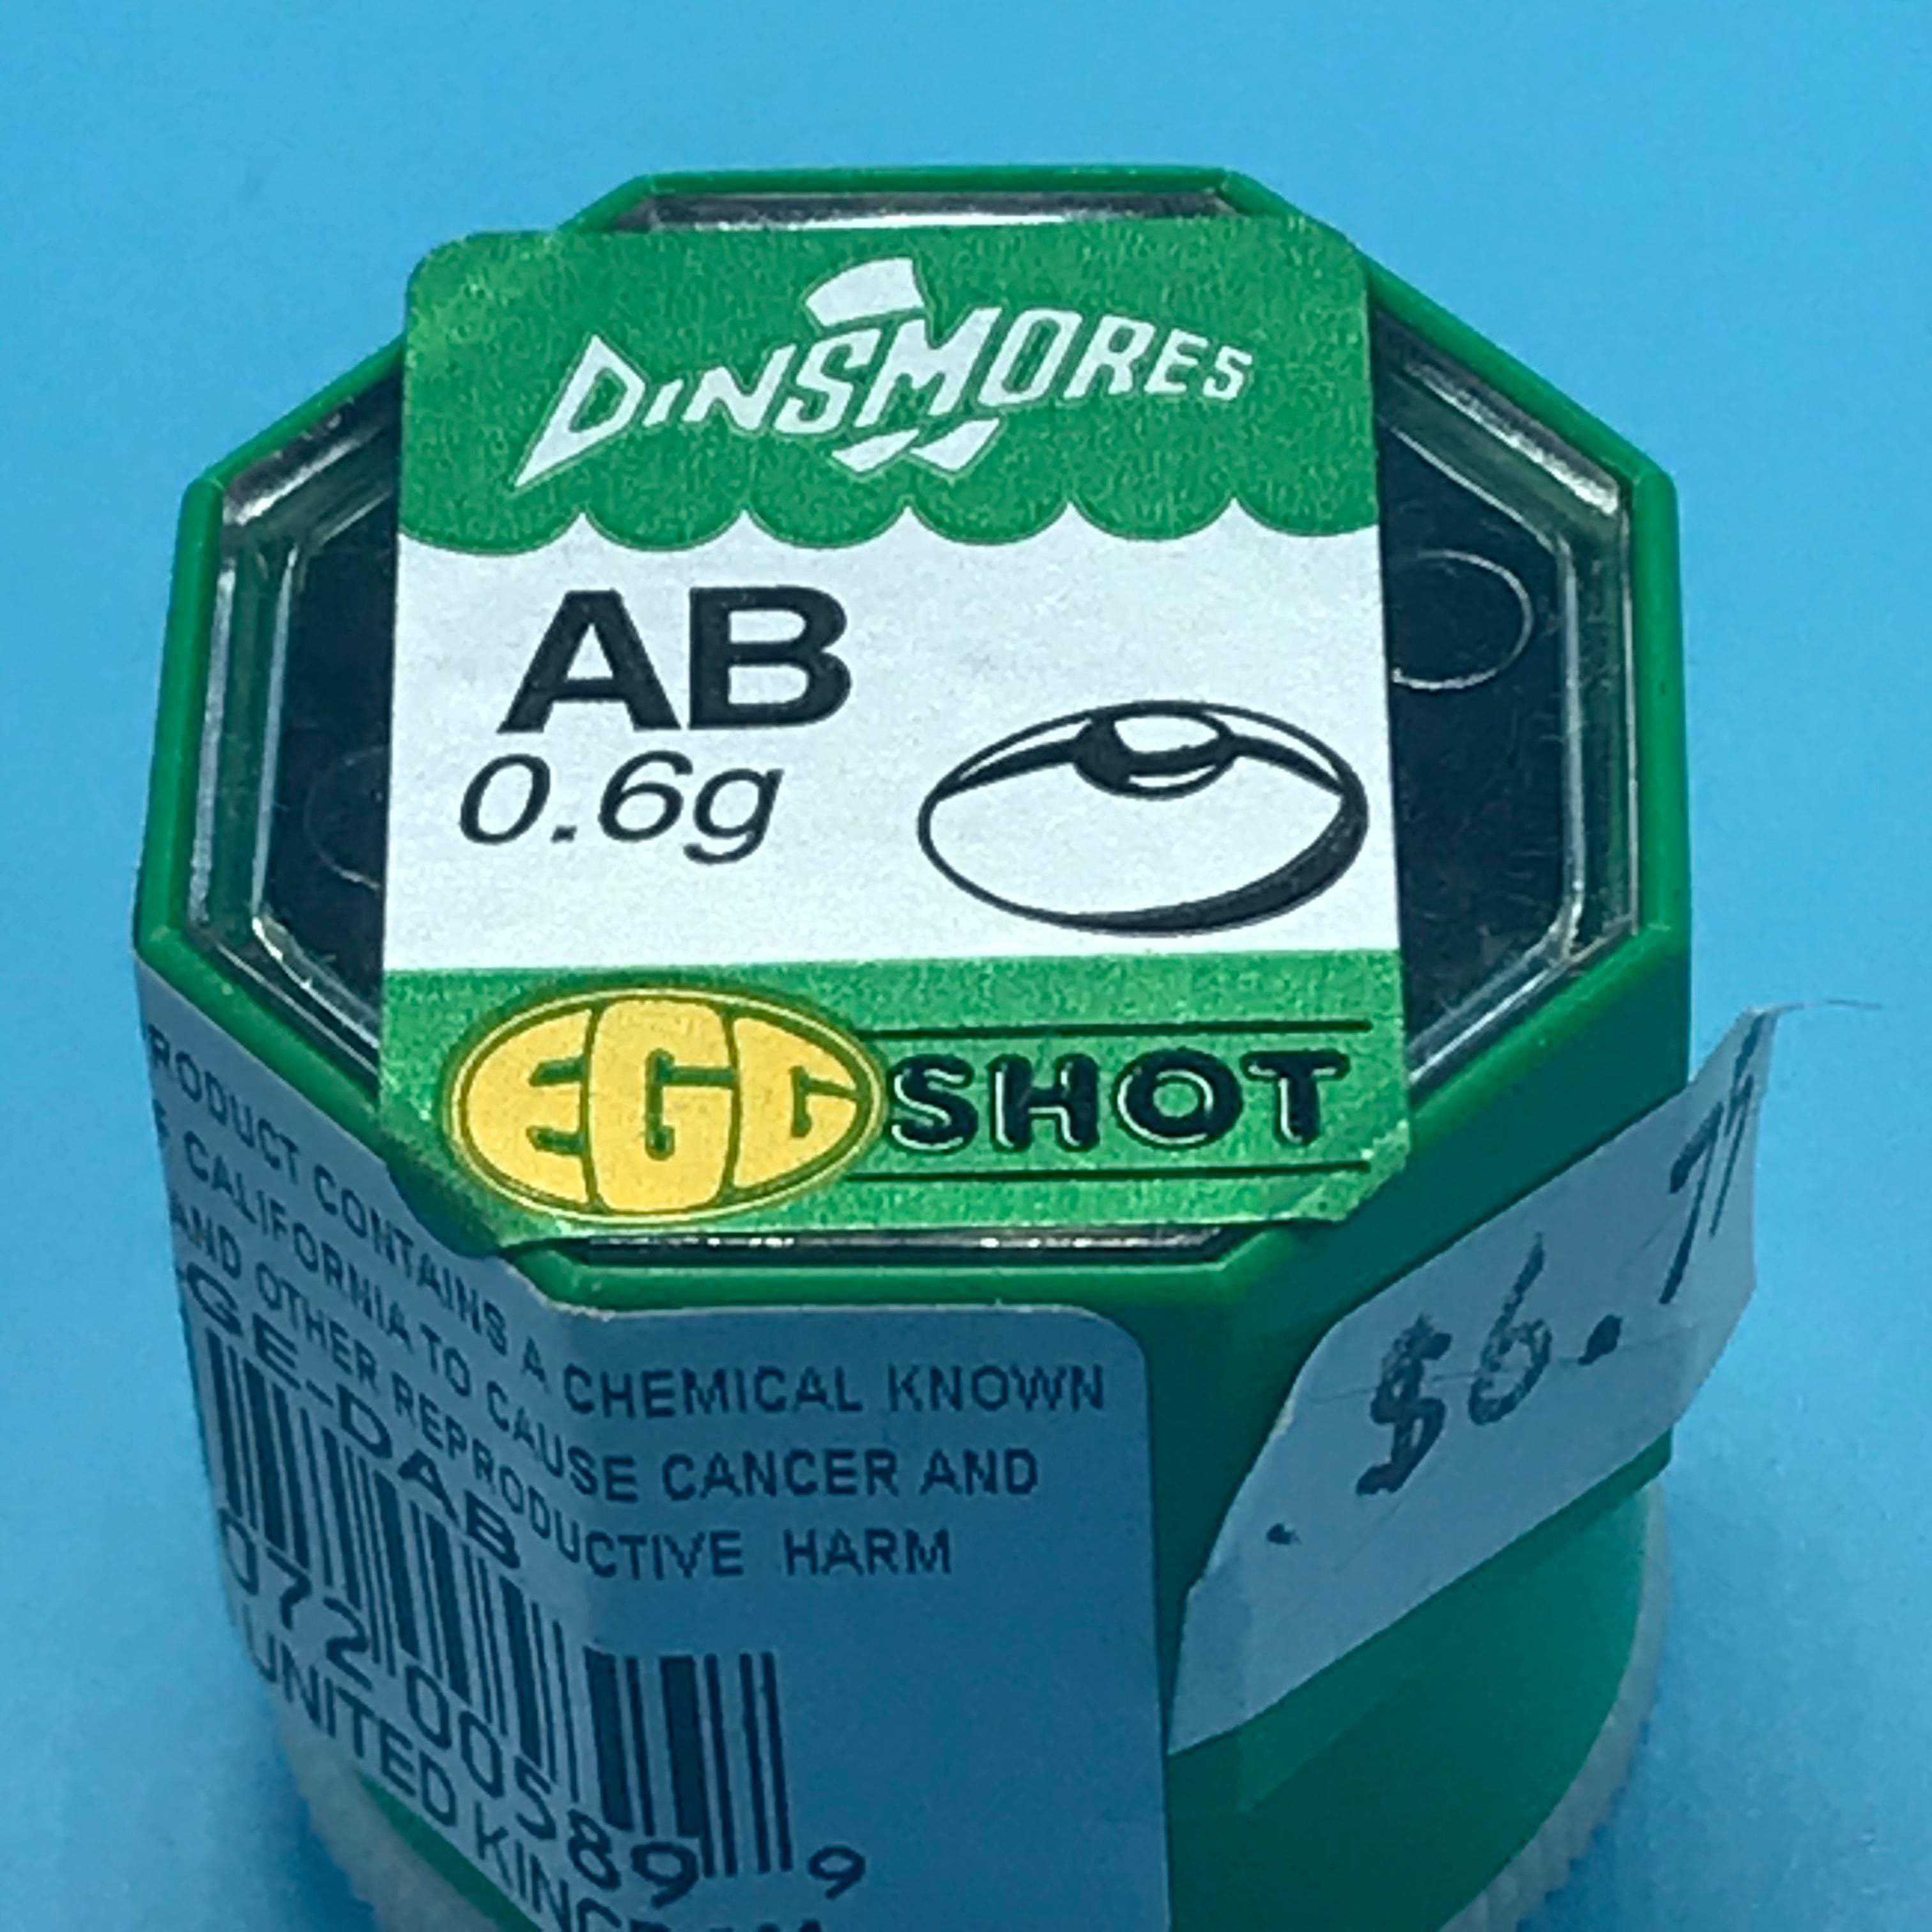 Dinsmores Individual Egg Shot Dispenser AB